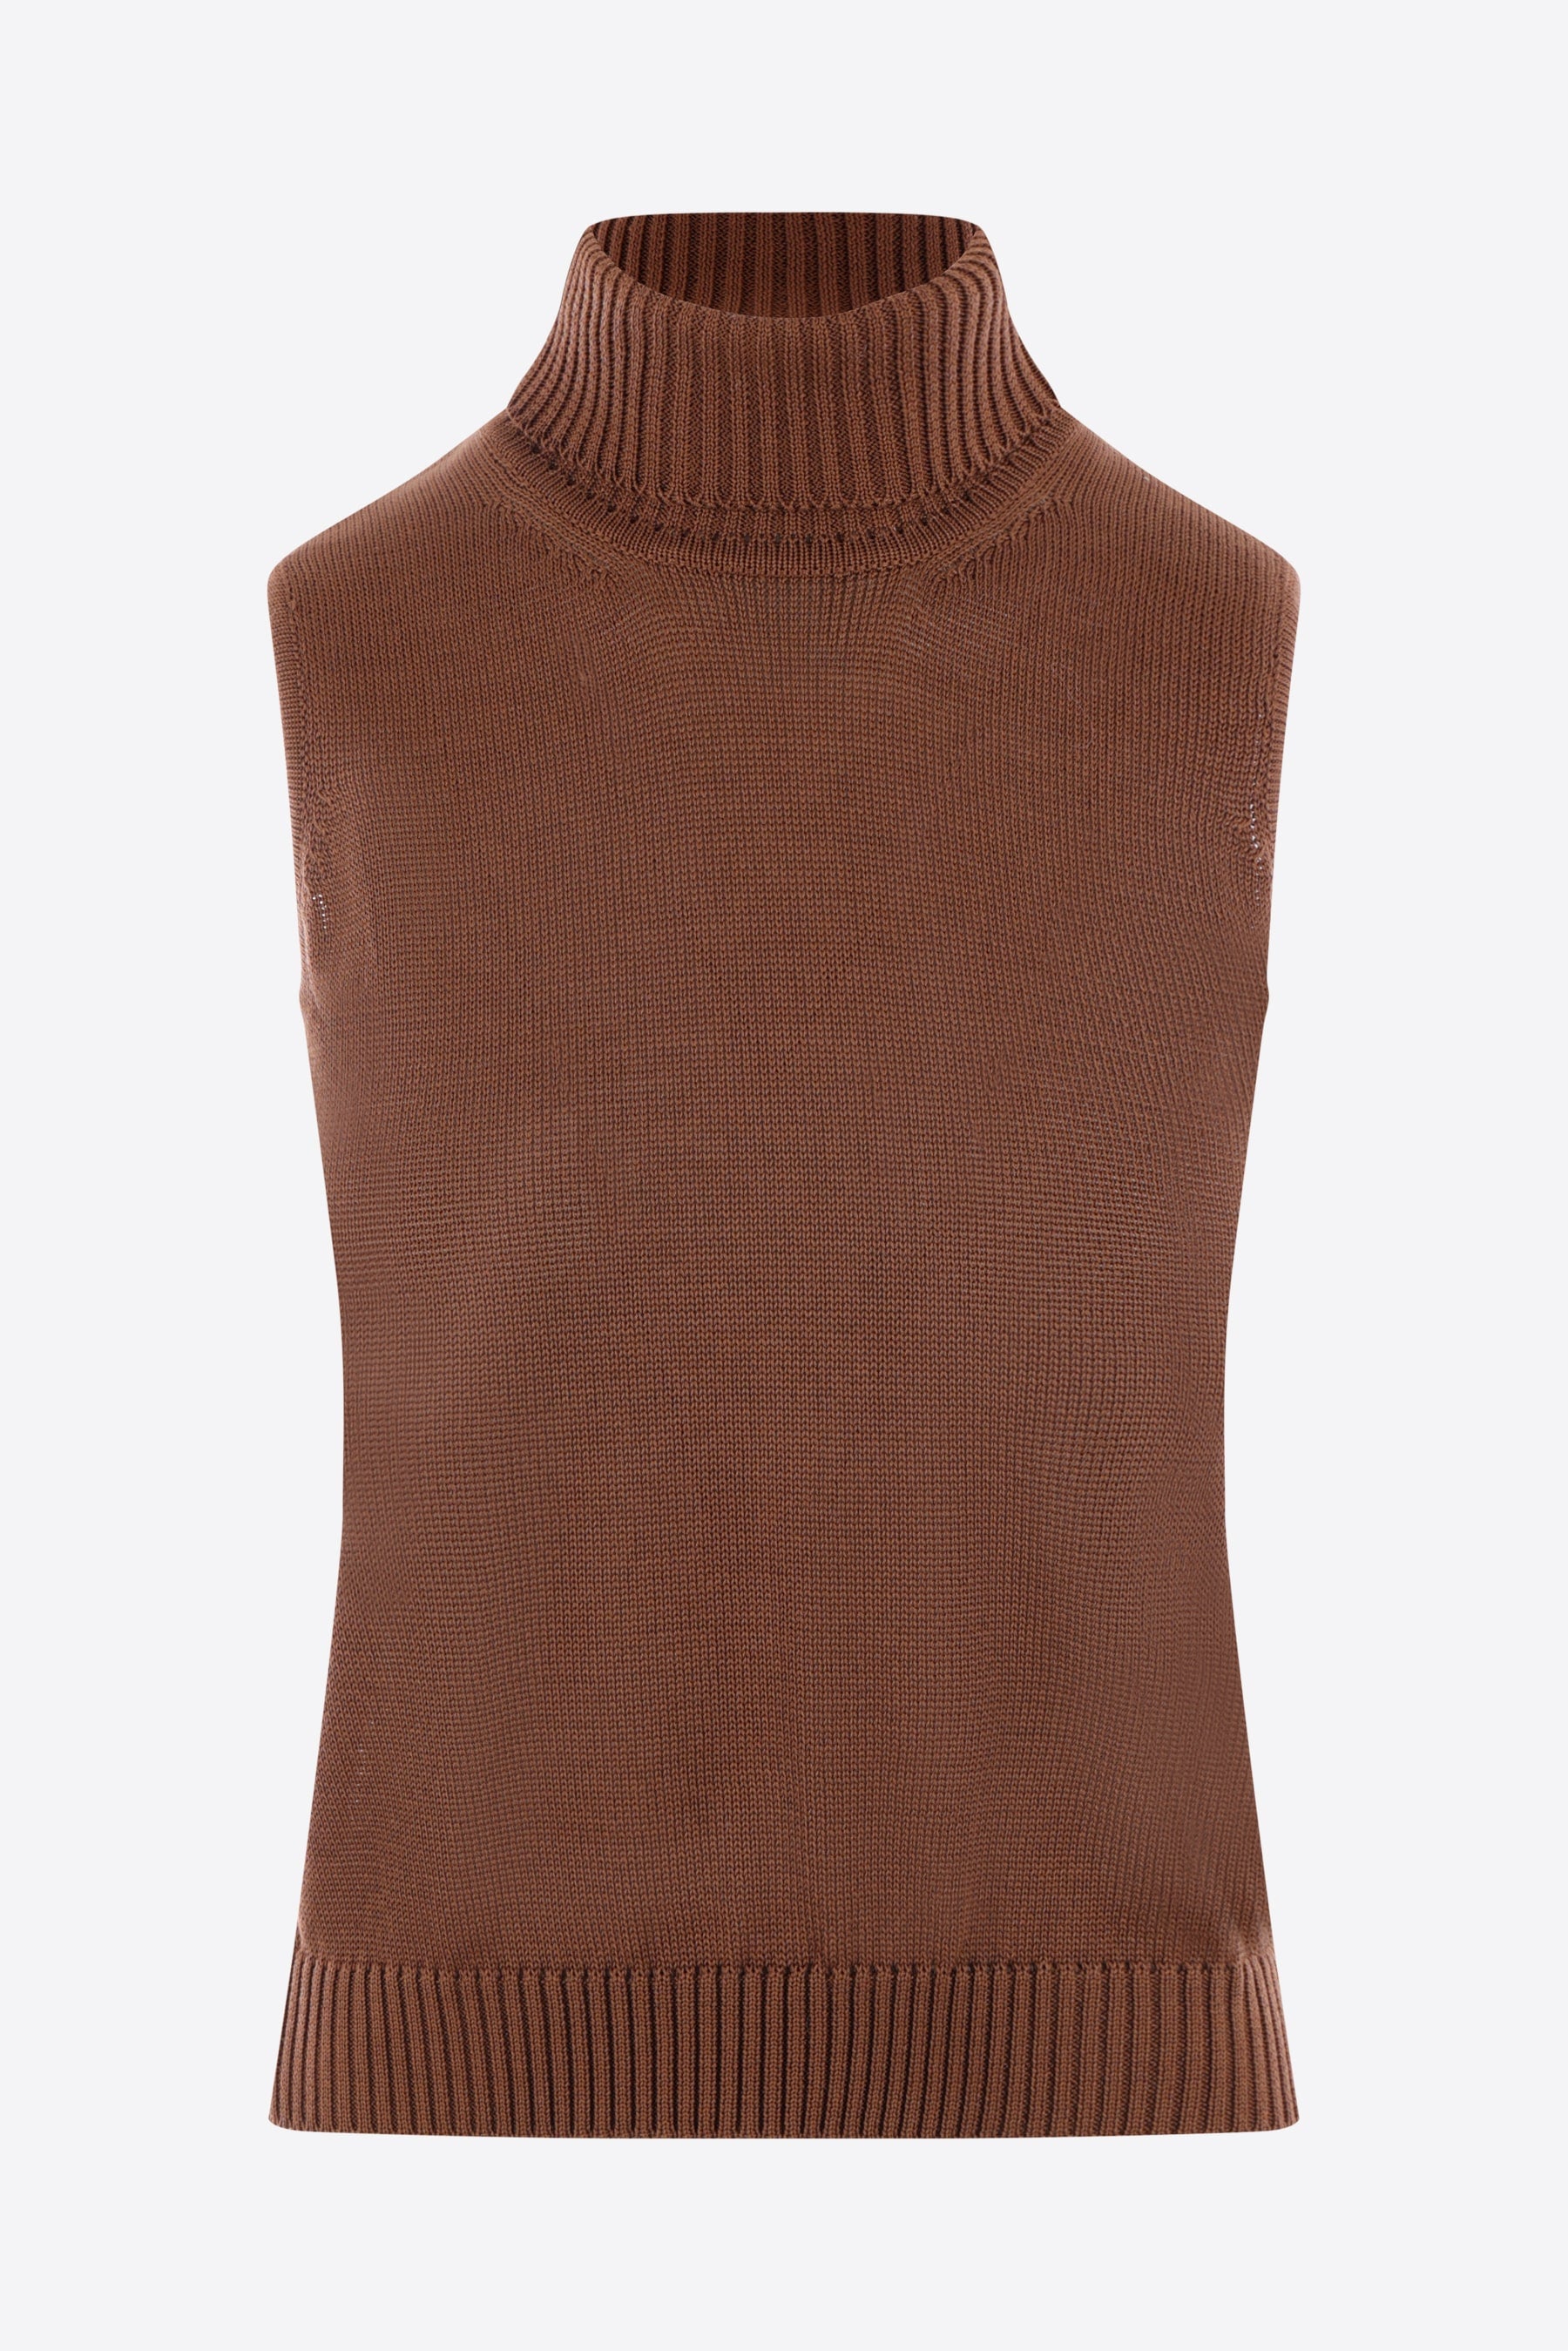 Turtleneck knit sleeveless top